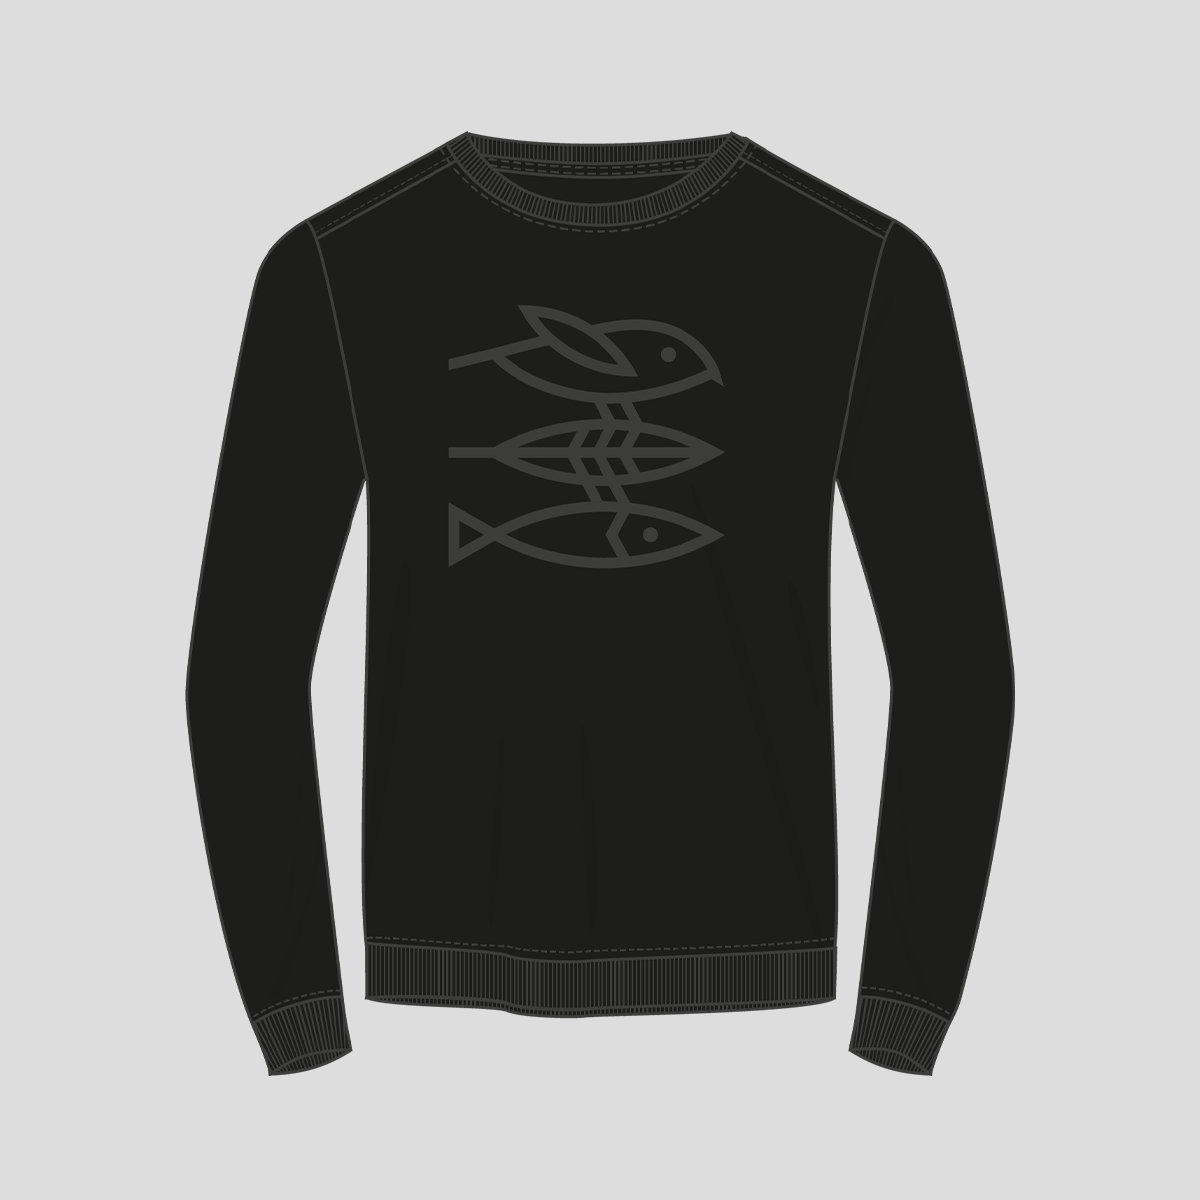 Unisex Sweatshirt "Mission Erde" black